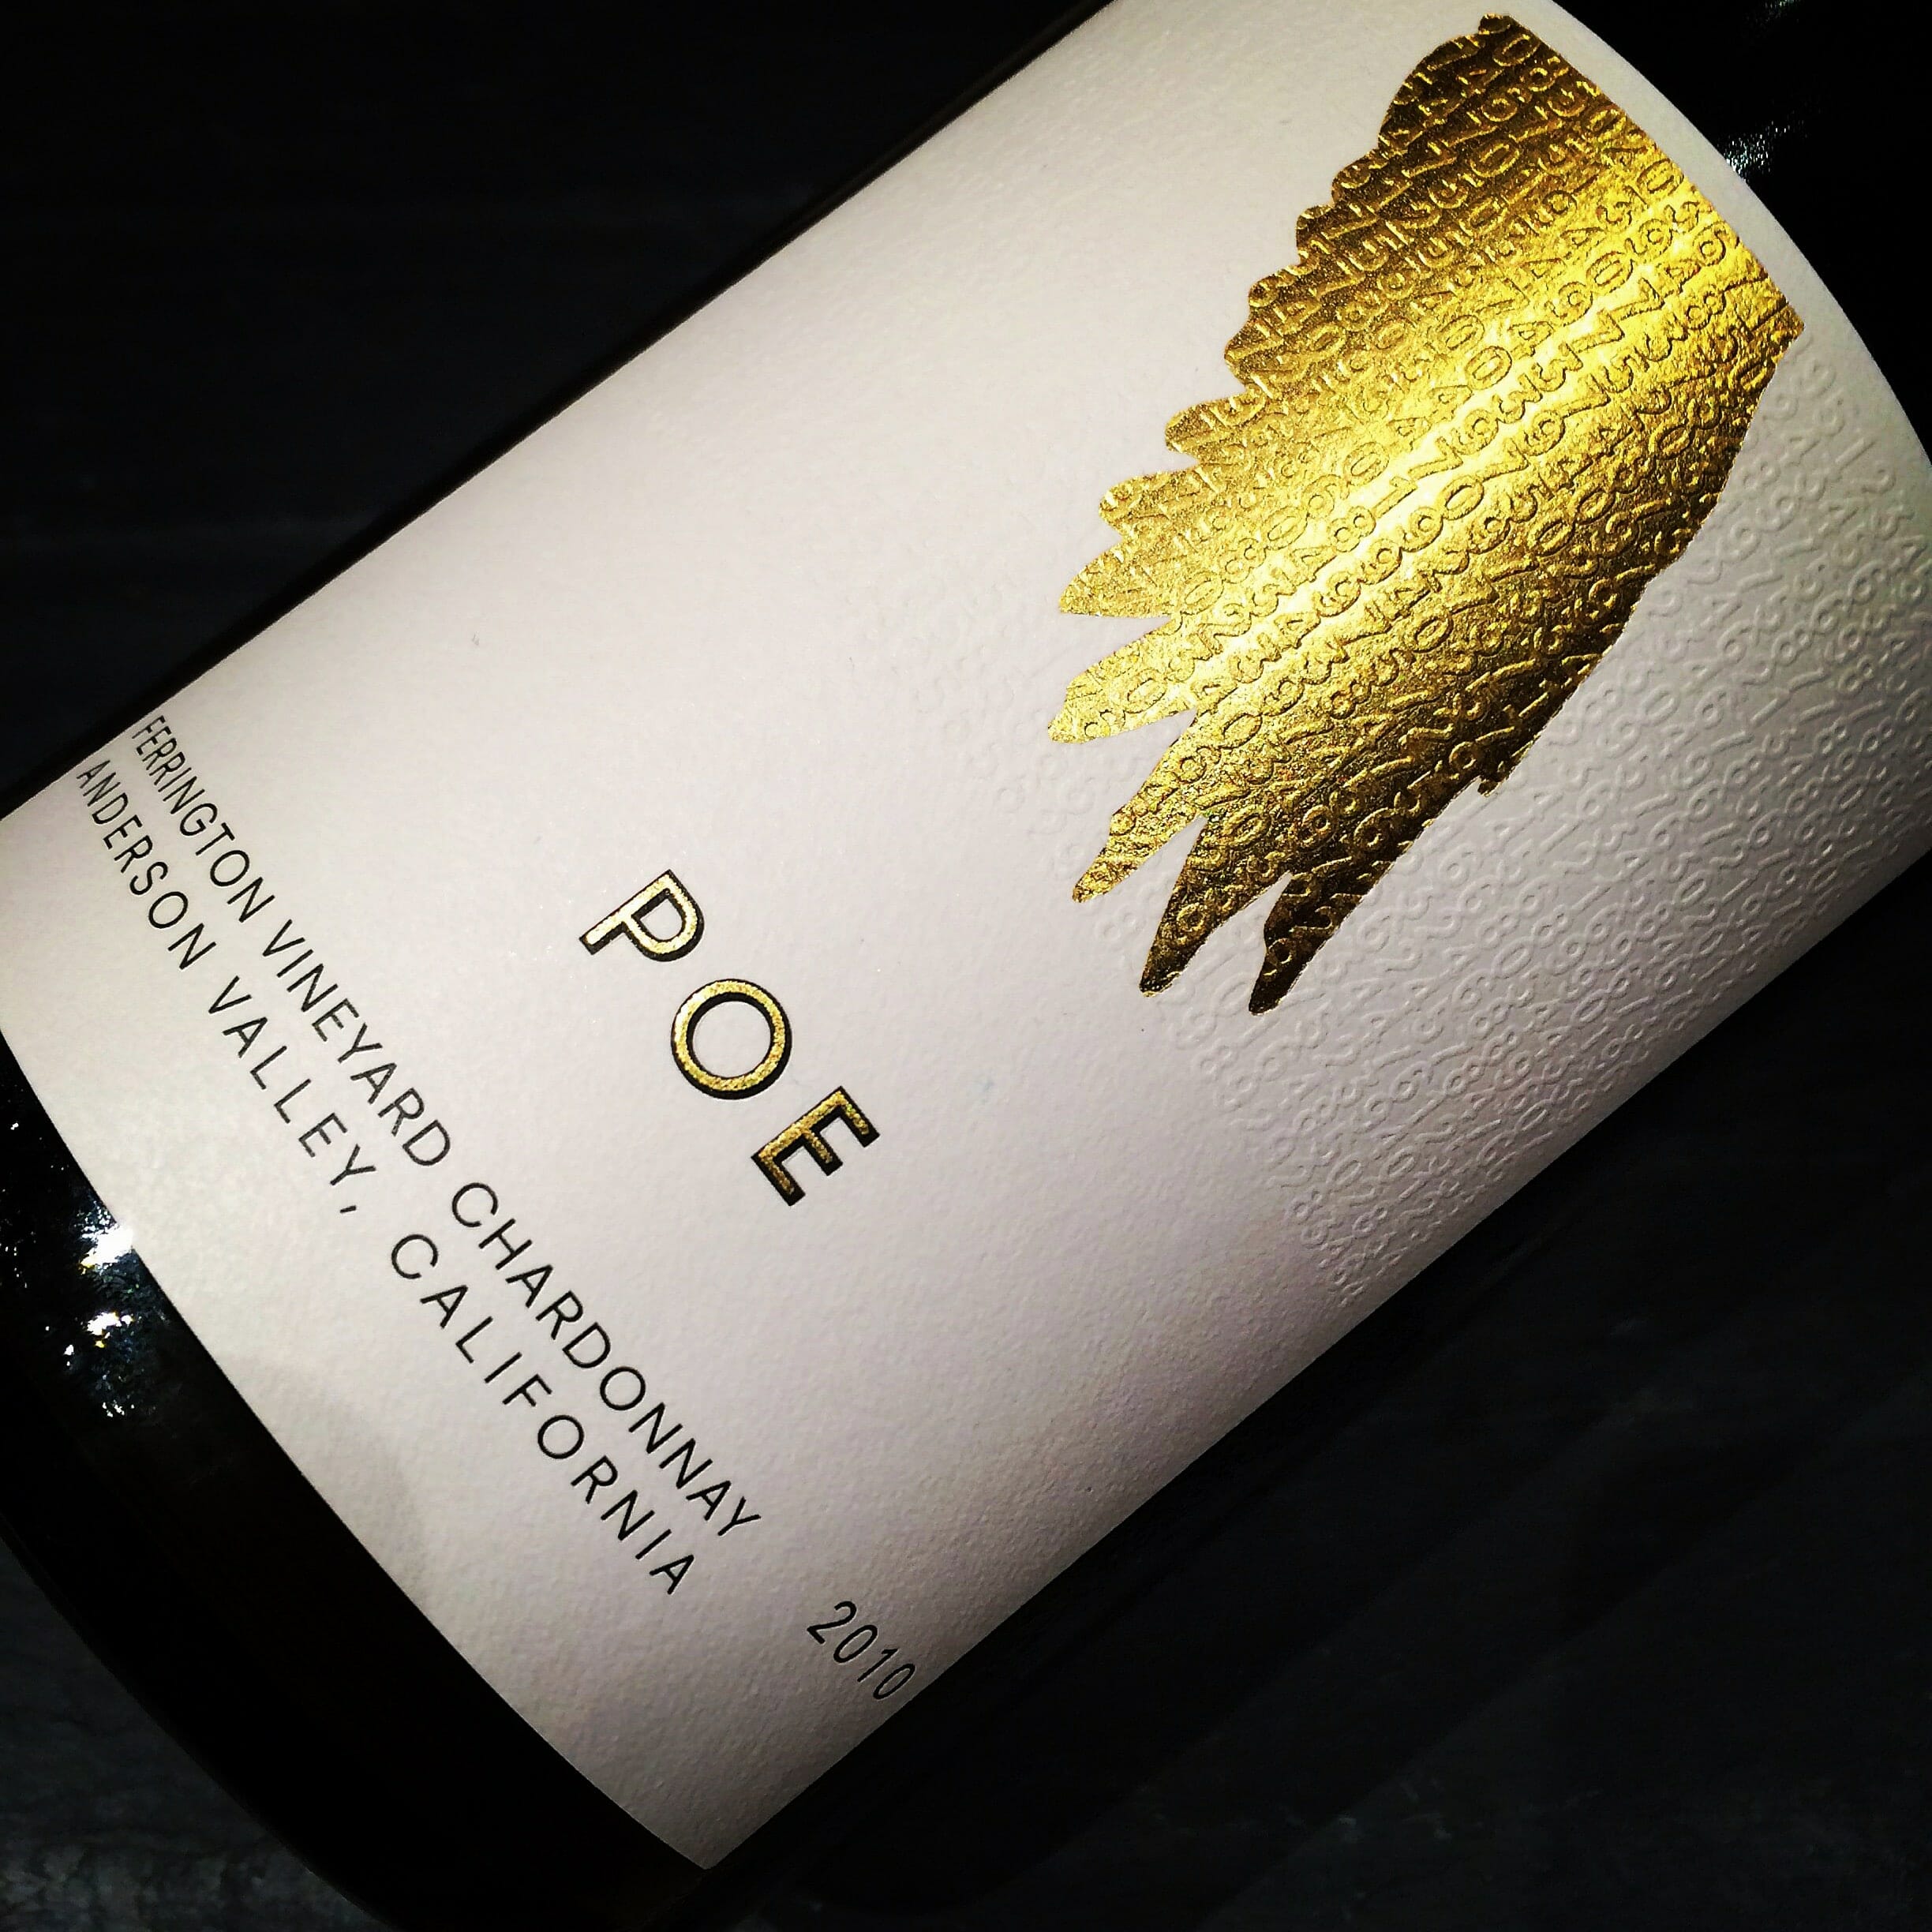 POE Wines Ferrington Vineyard California Chardonnay 2010